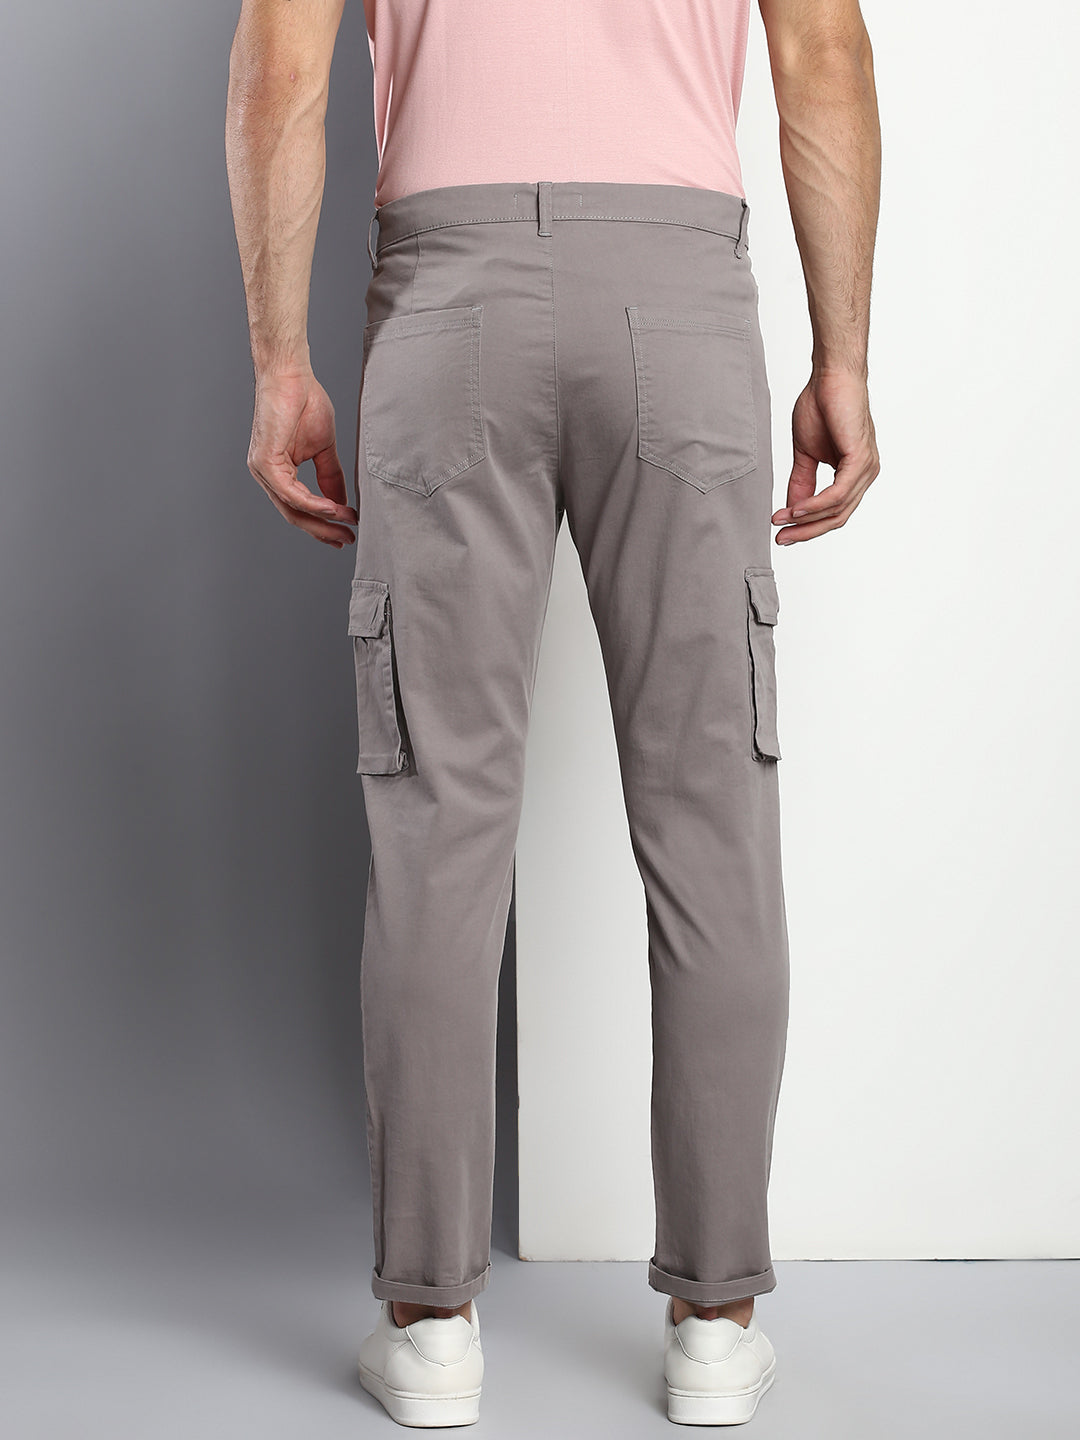 Half Sleeve Mens Trousers - Buy Half Sleeve Mens Trousers Online at Best  Prices In India | Flipkart.com